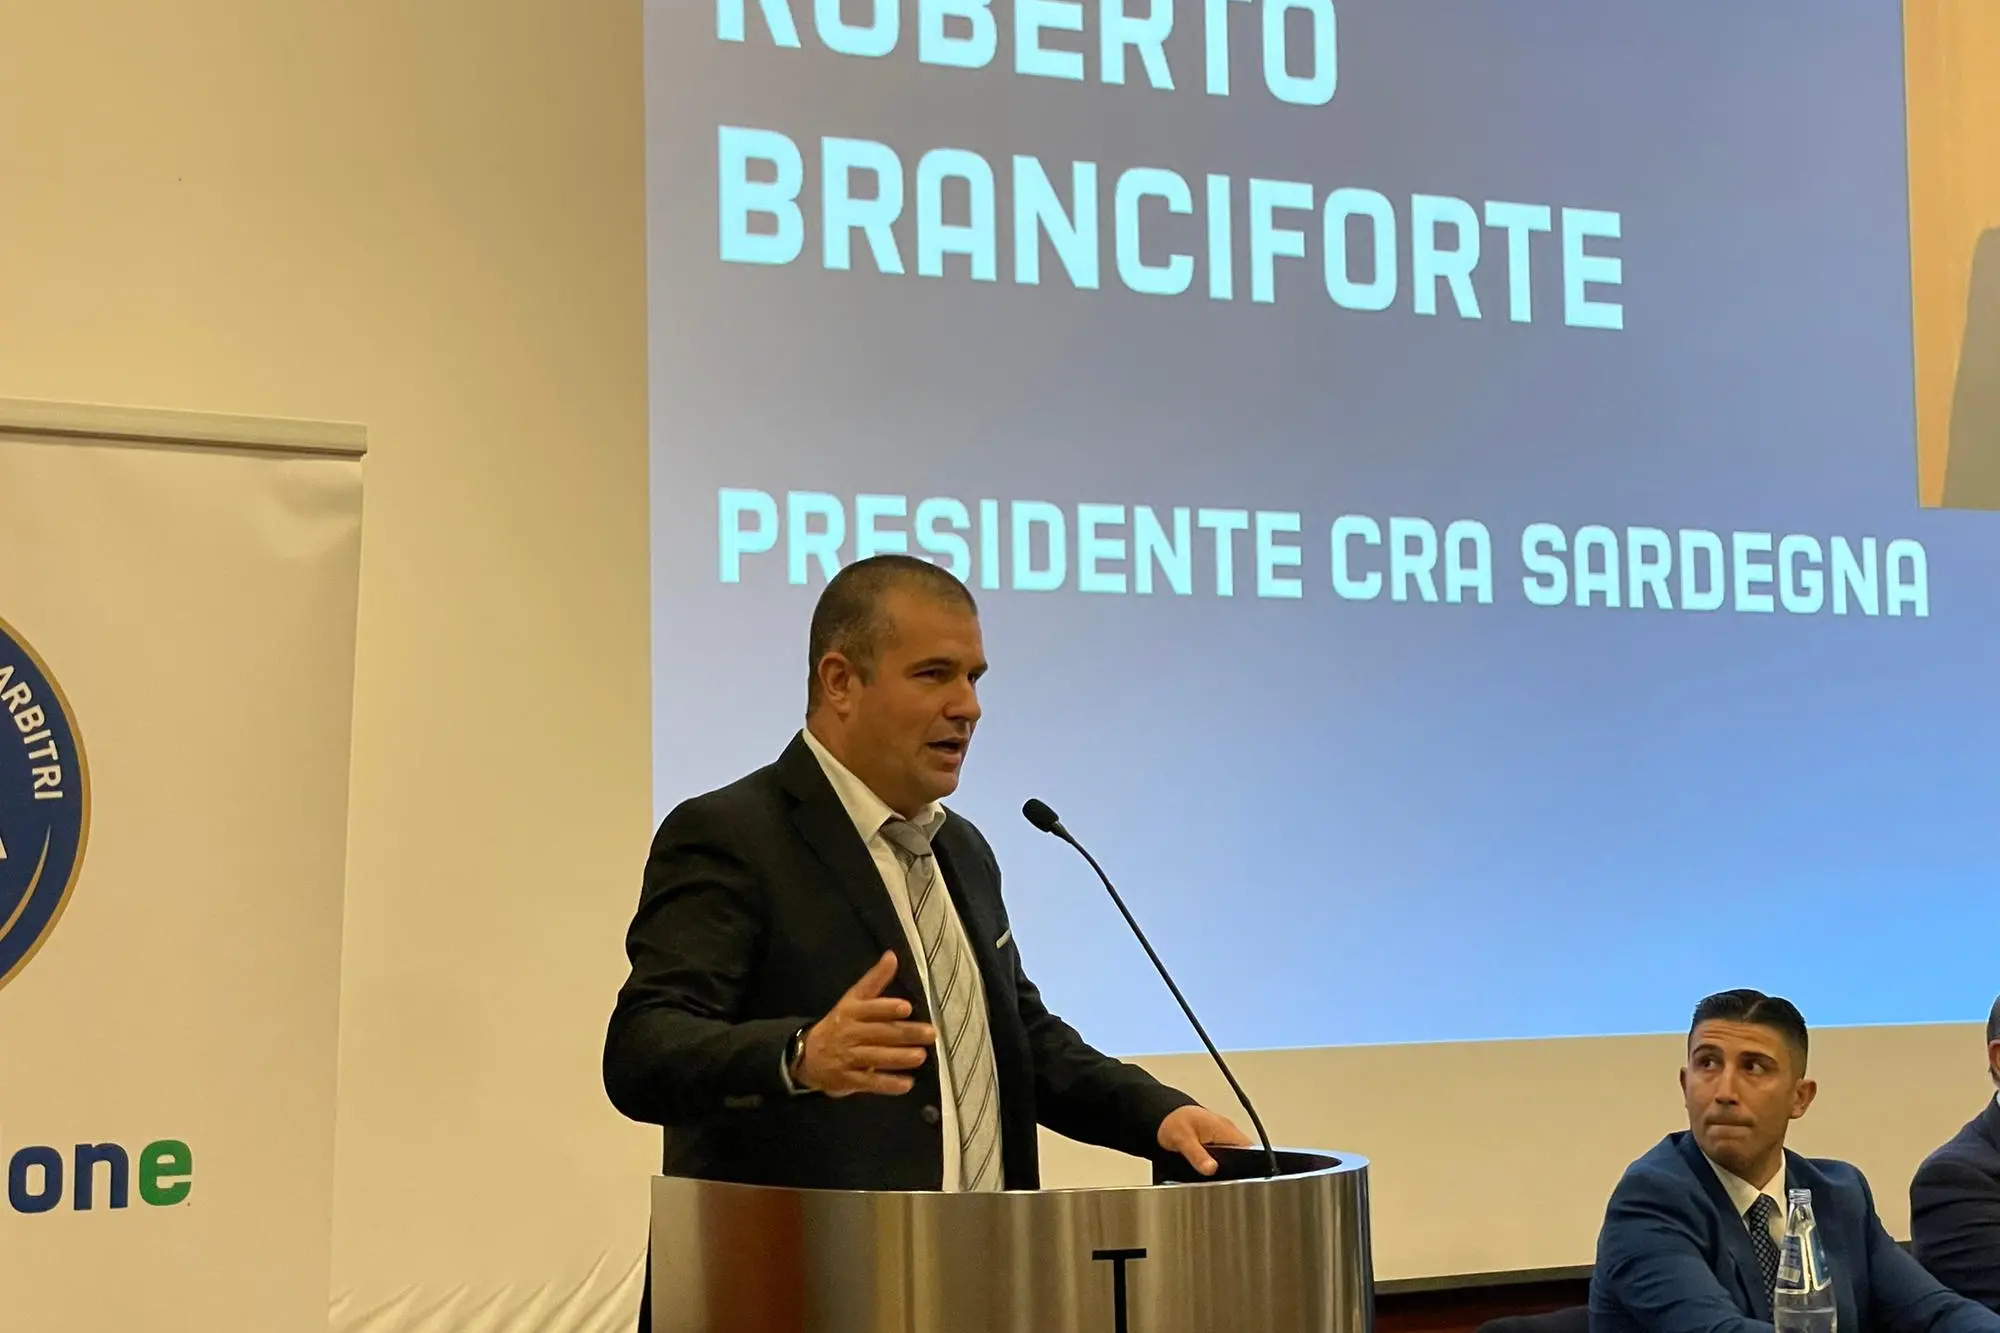 Roberto Branciforte, presidente CRA Sardegna (foto Spignesi)